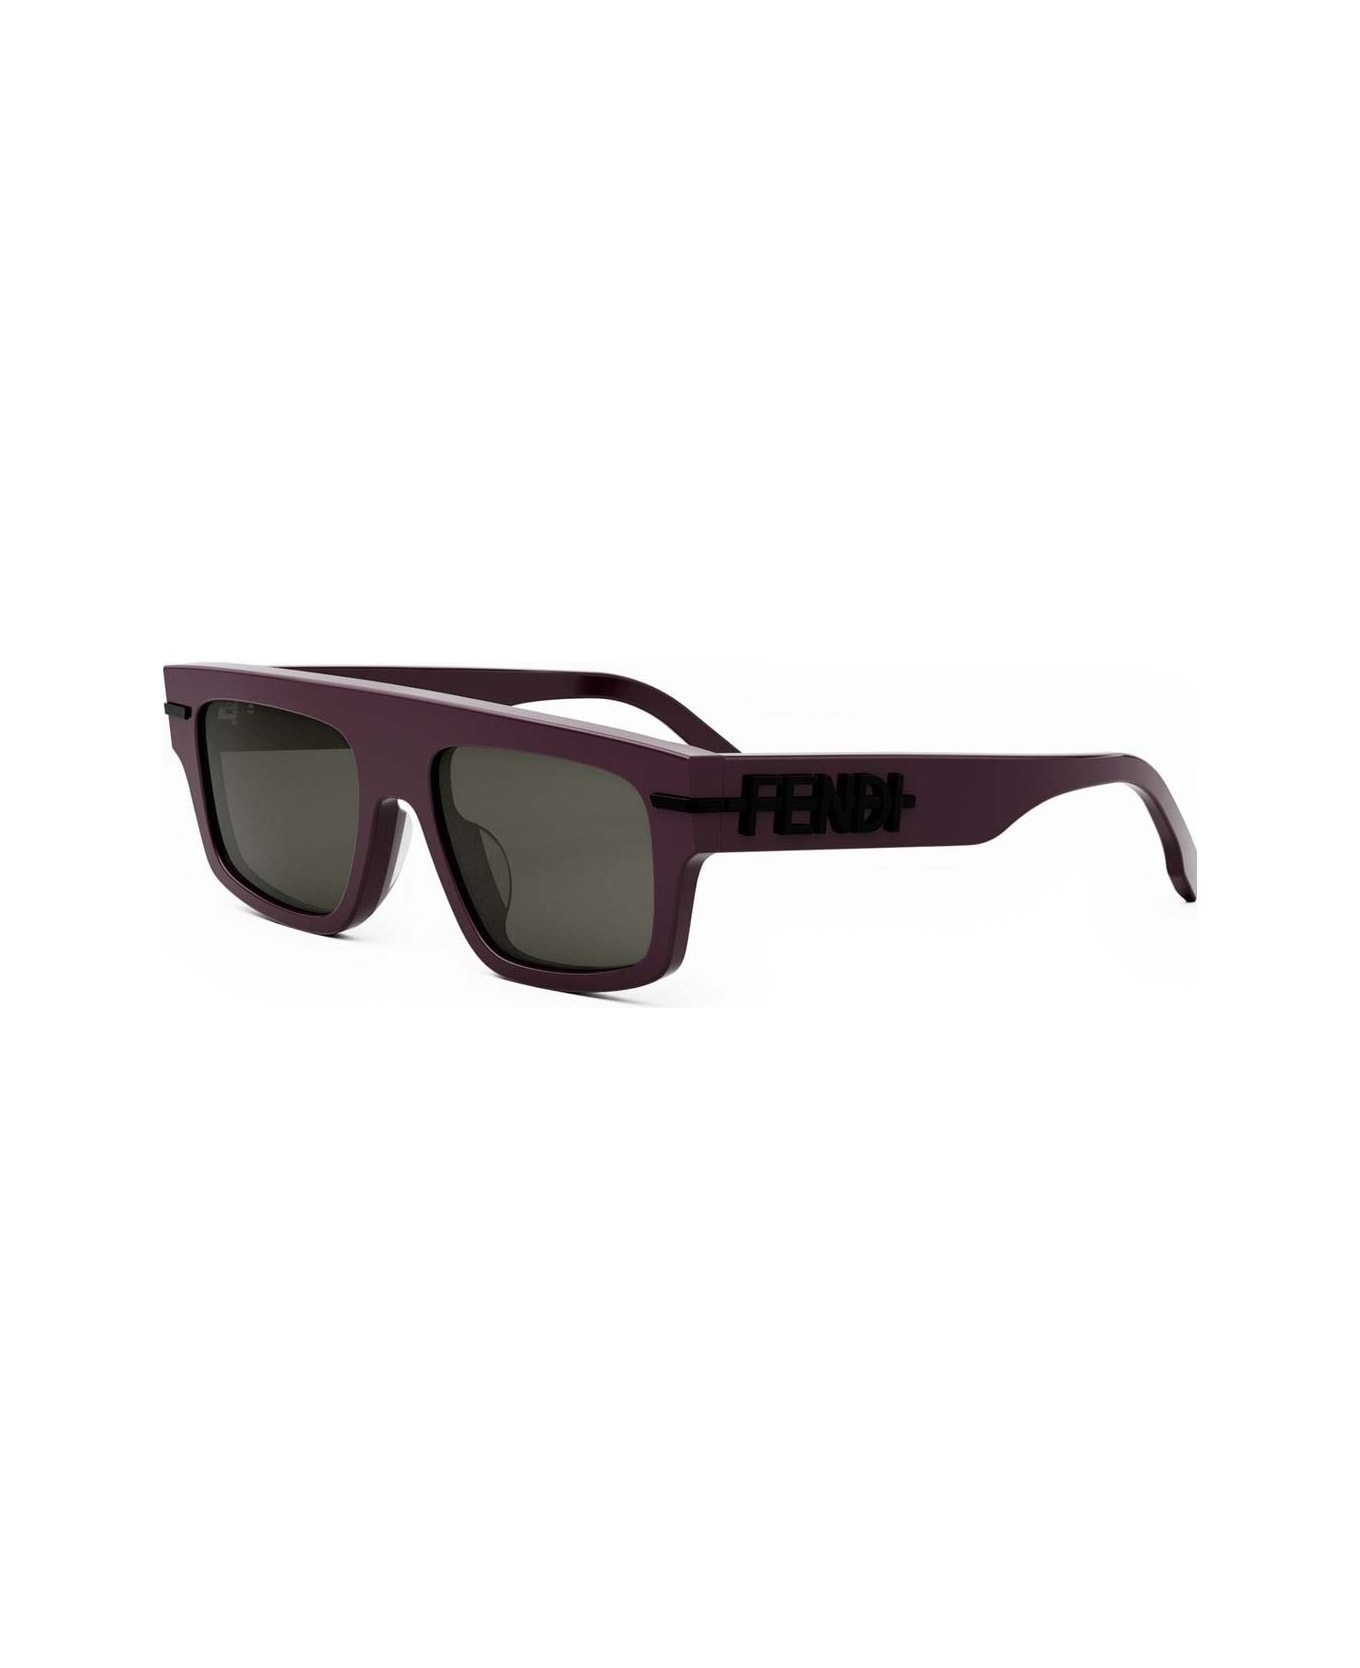 Fendi Eyewear Sunglasses - Bordeaux/Grigio